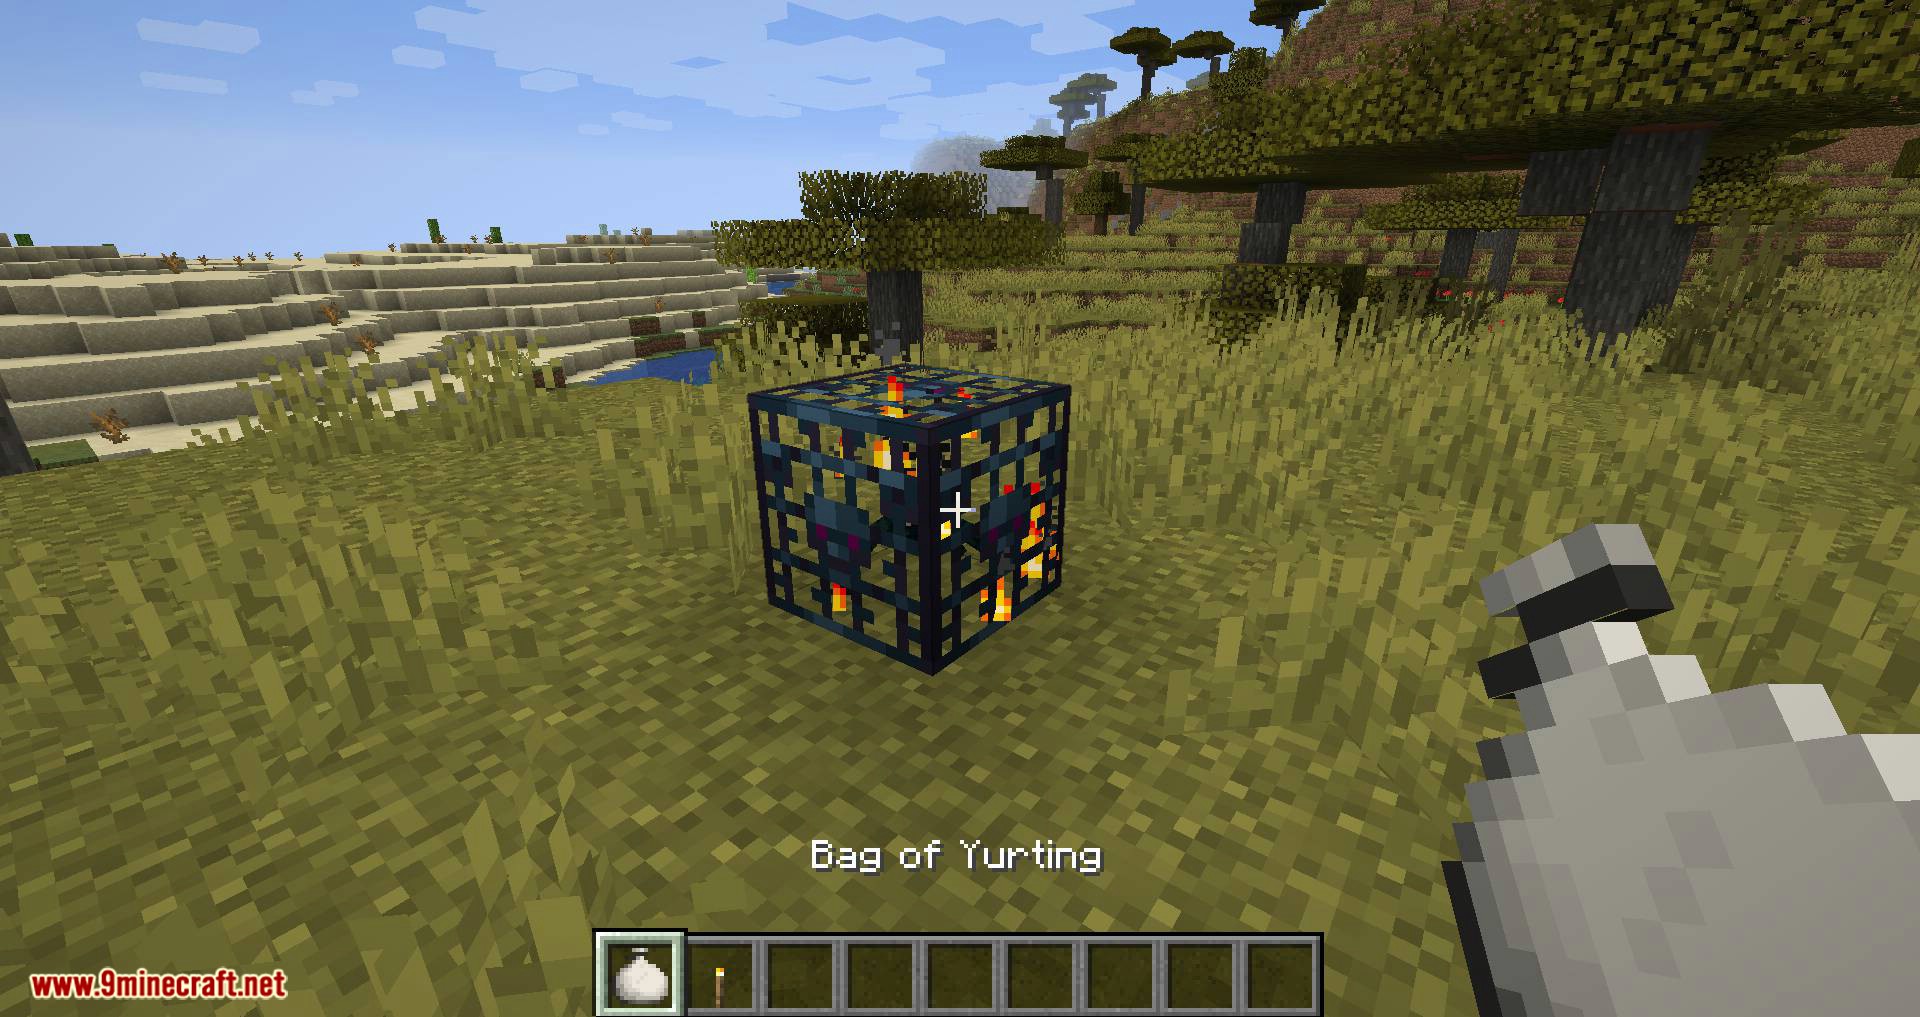 Bag of Yurting Mod 1.16.1/1.15.2 - Minecraft Mod Download